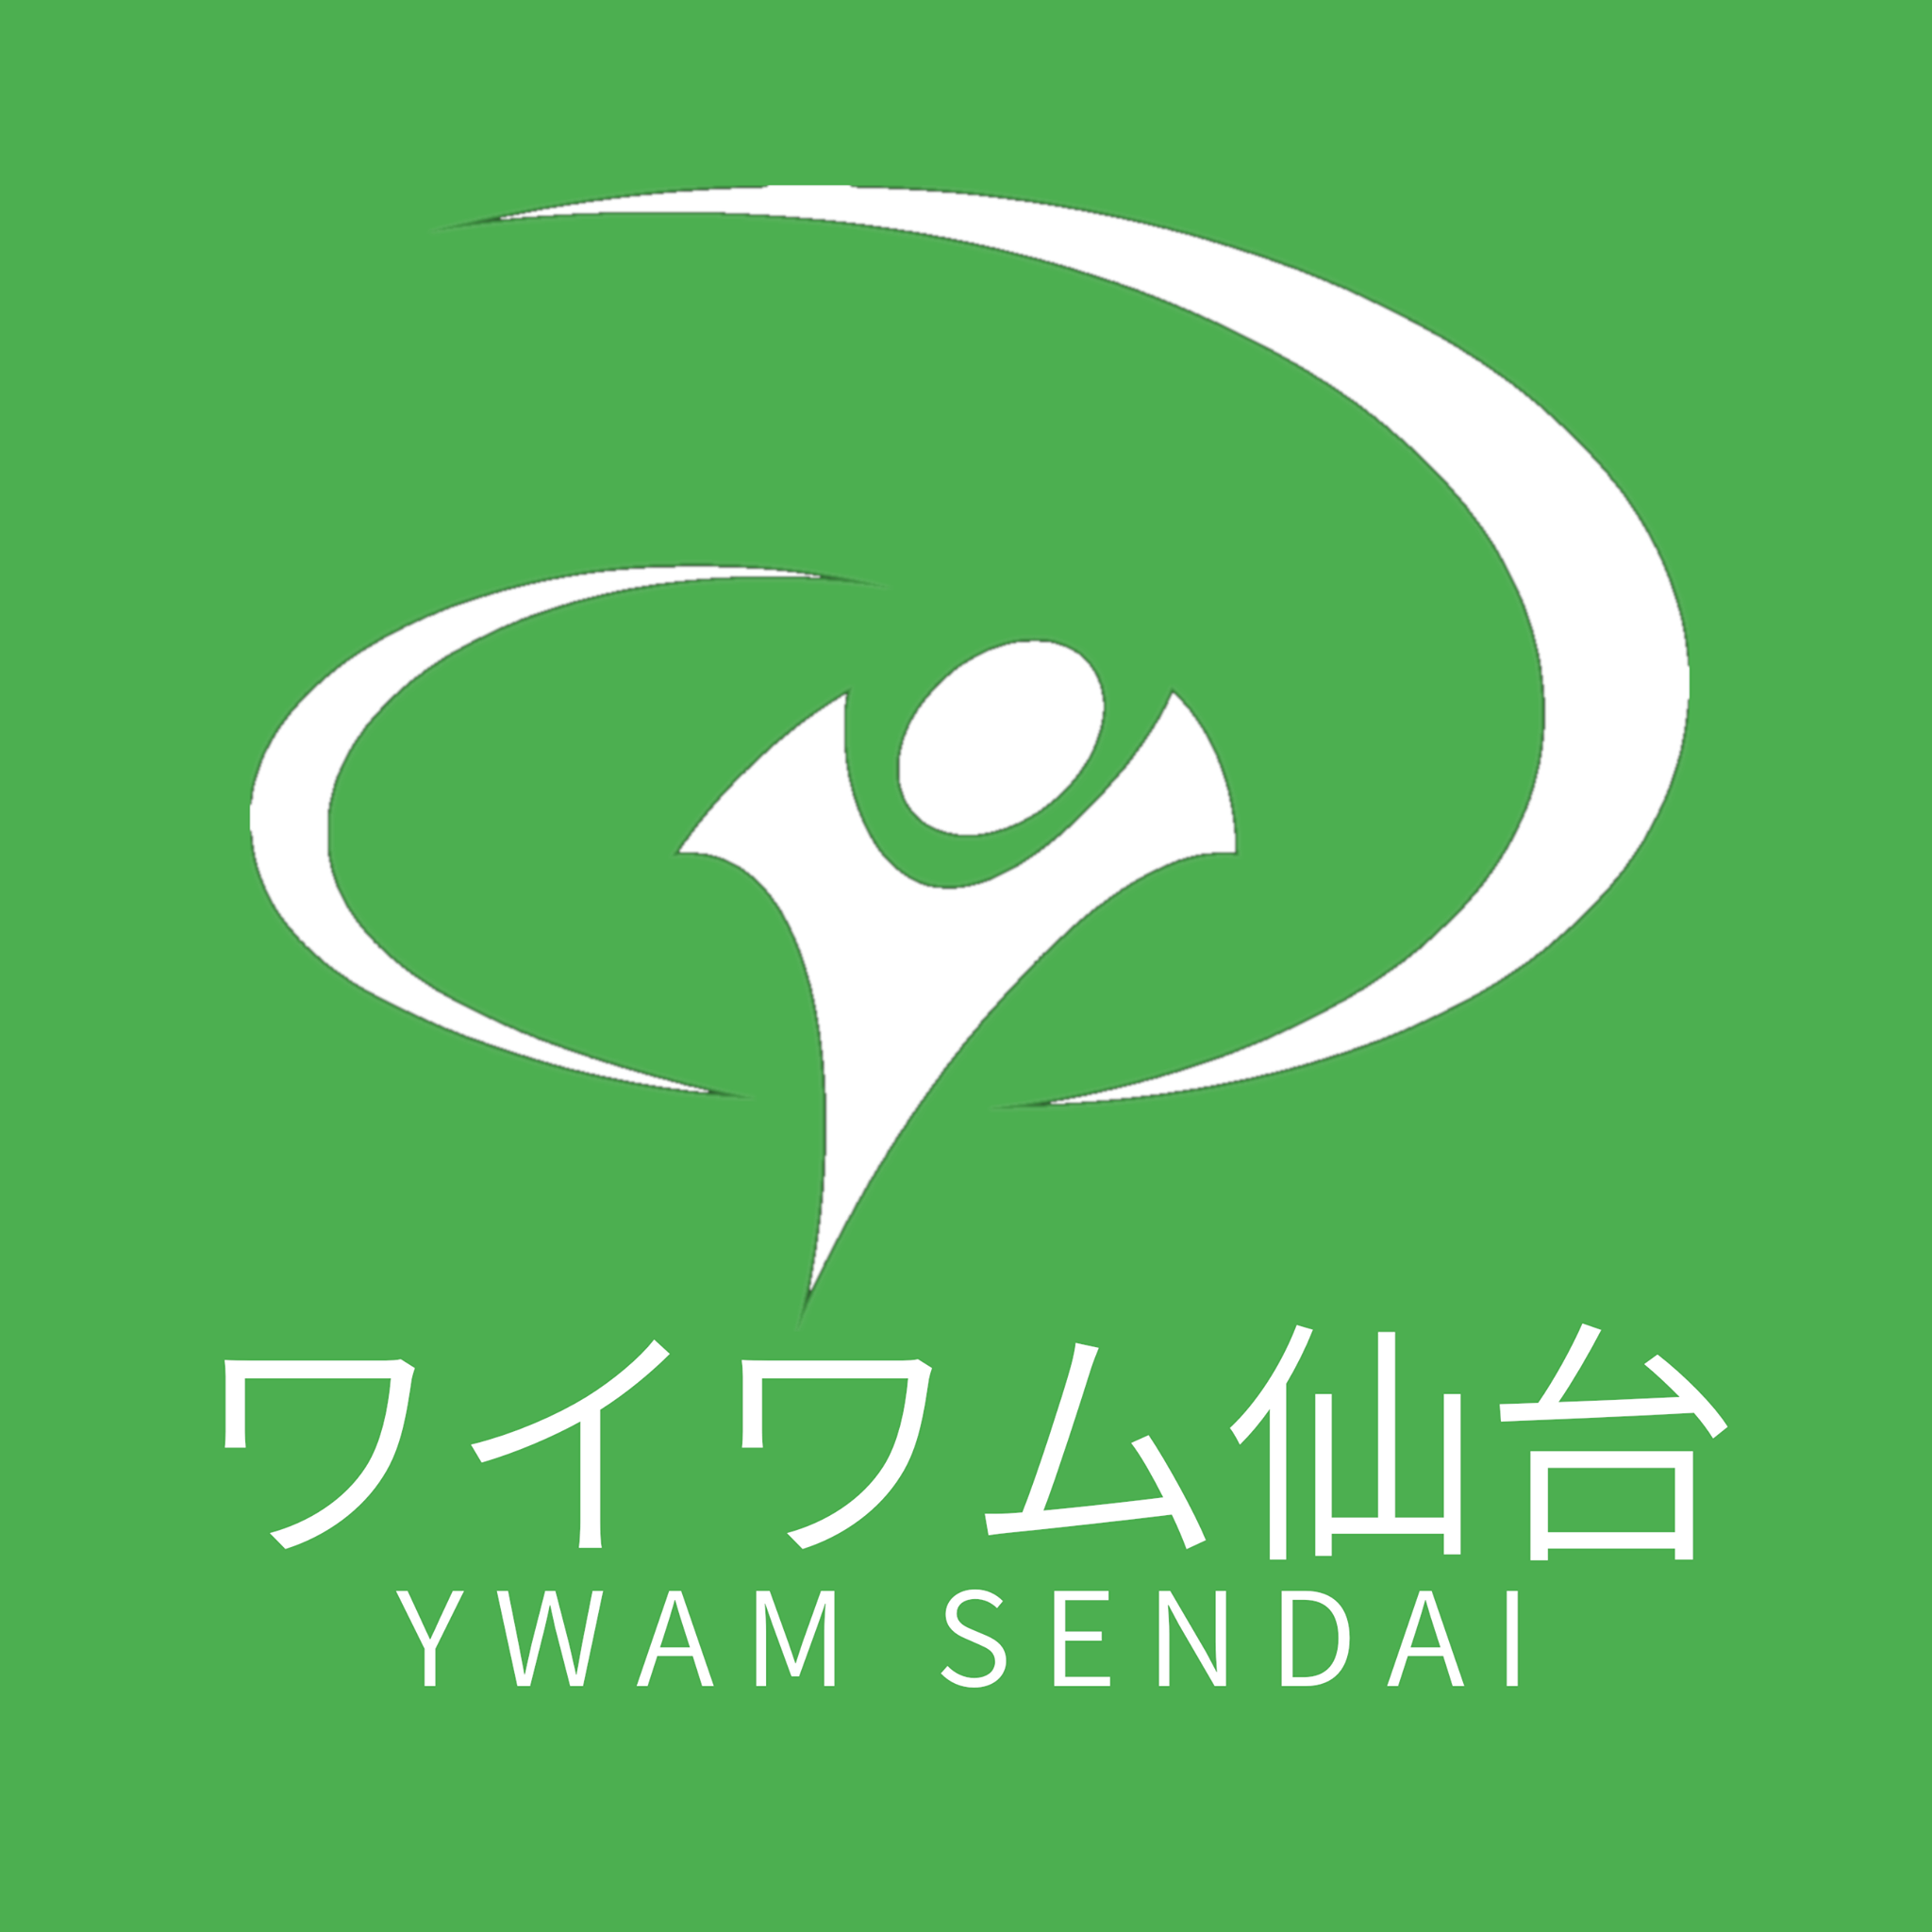 YWAM Sendai Logo